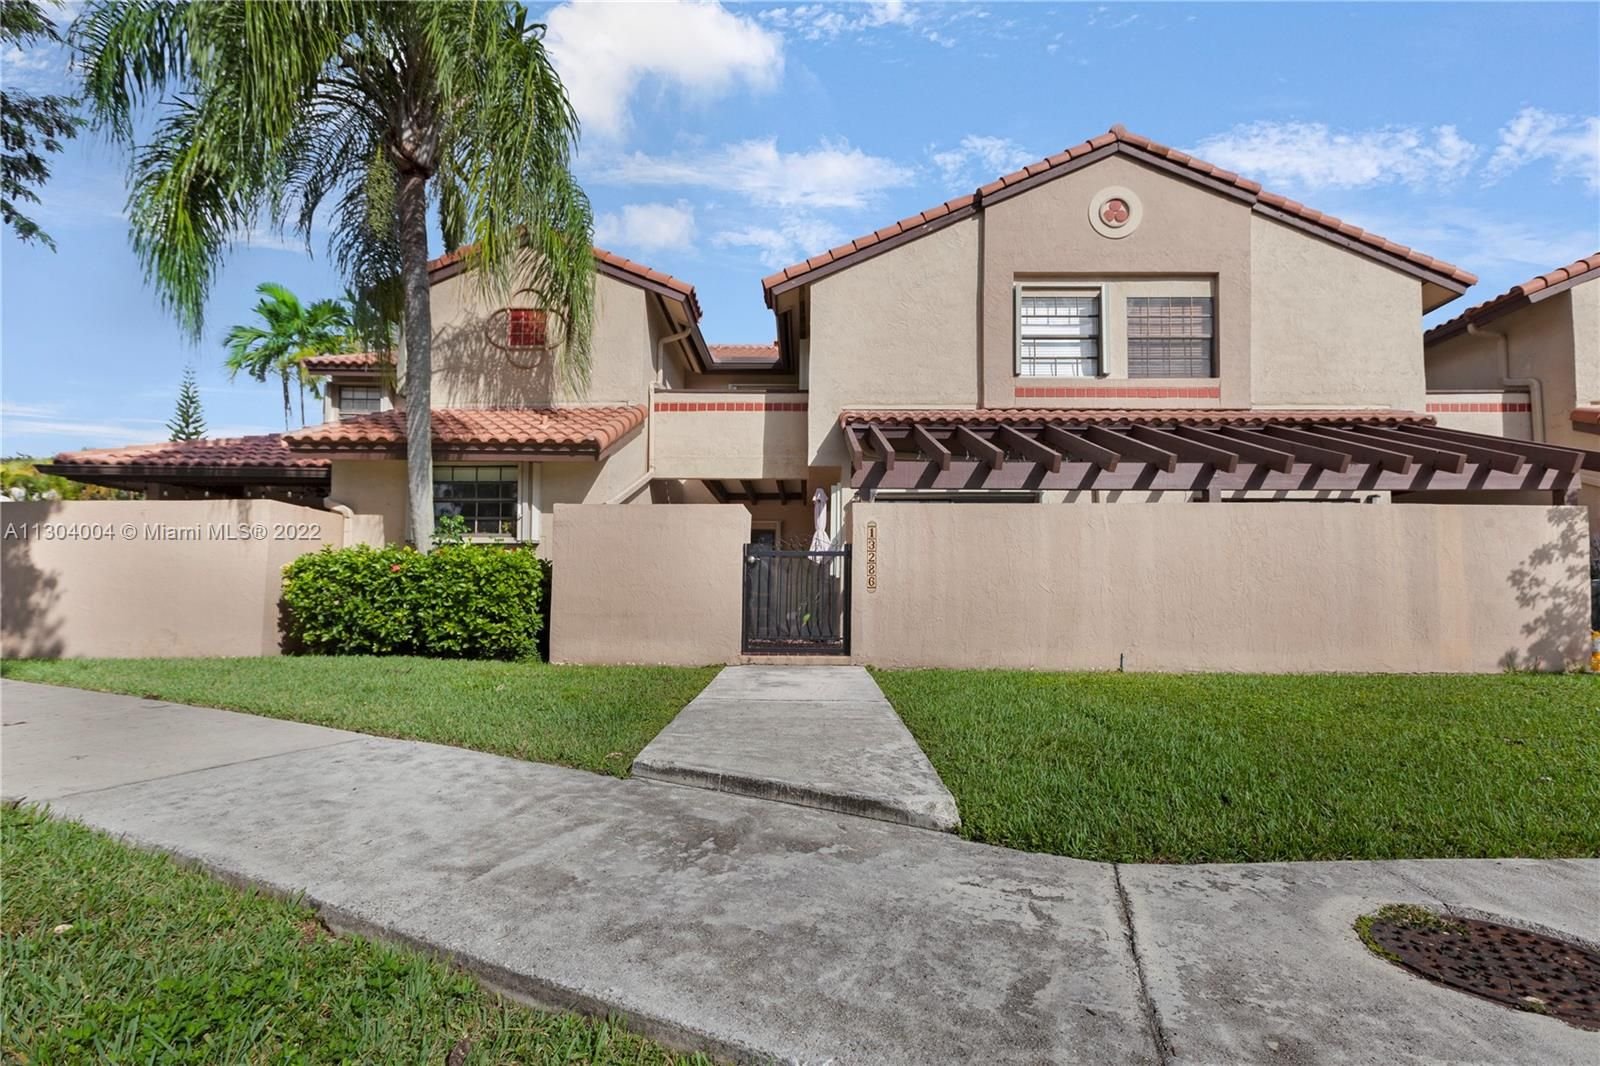 Real estate property located at 13286 114th Ter, Miami-Dade County, Miami, FL